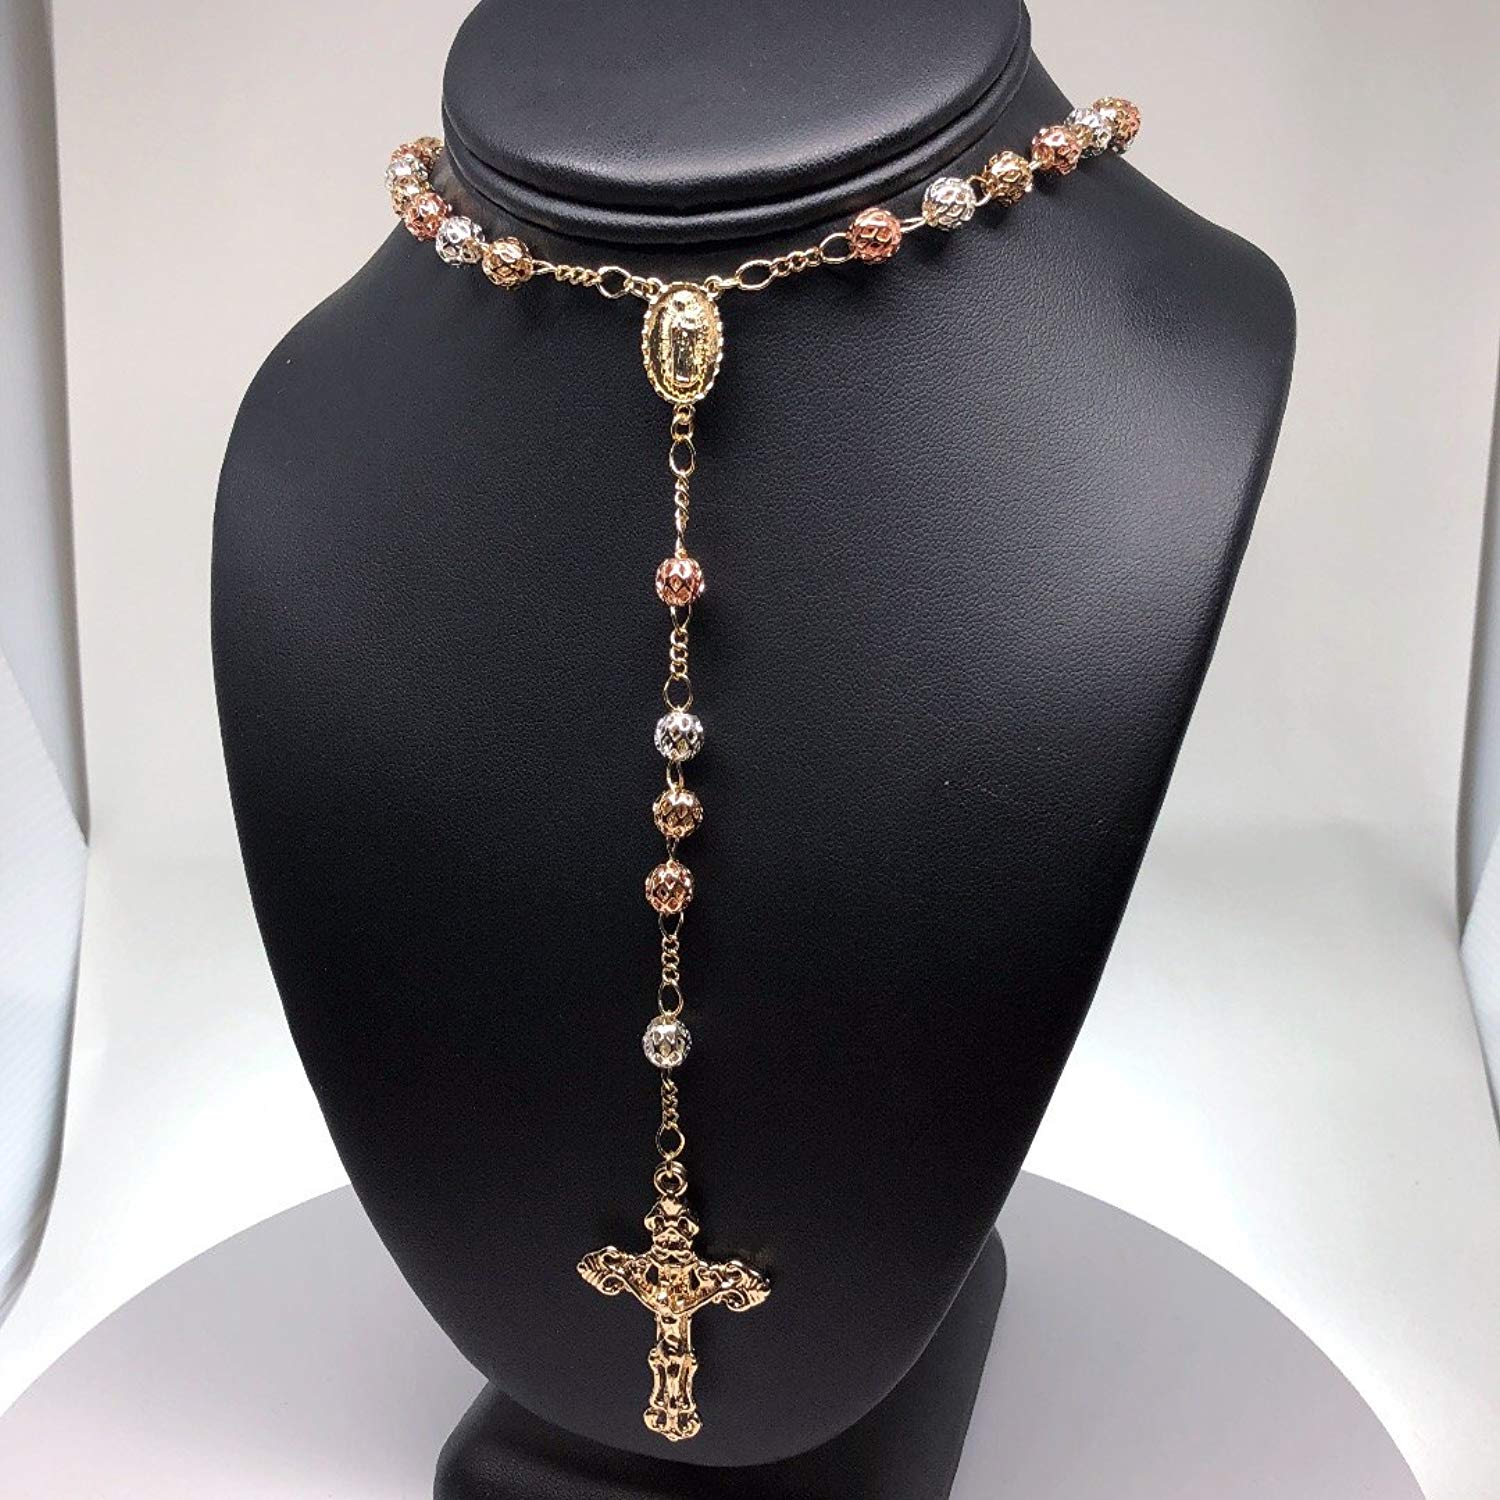 Aretes Rosario Virgen 3 Oros Laminado 18K|18K Gold Plated Virgin Rosary  Earrings